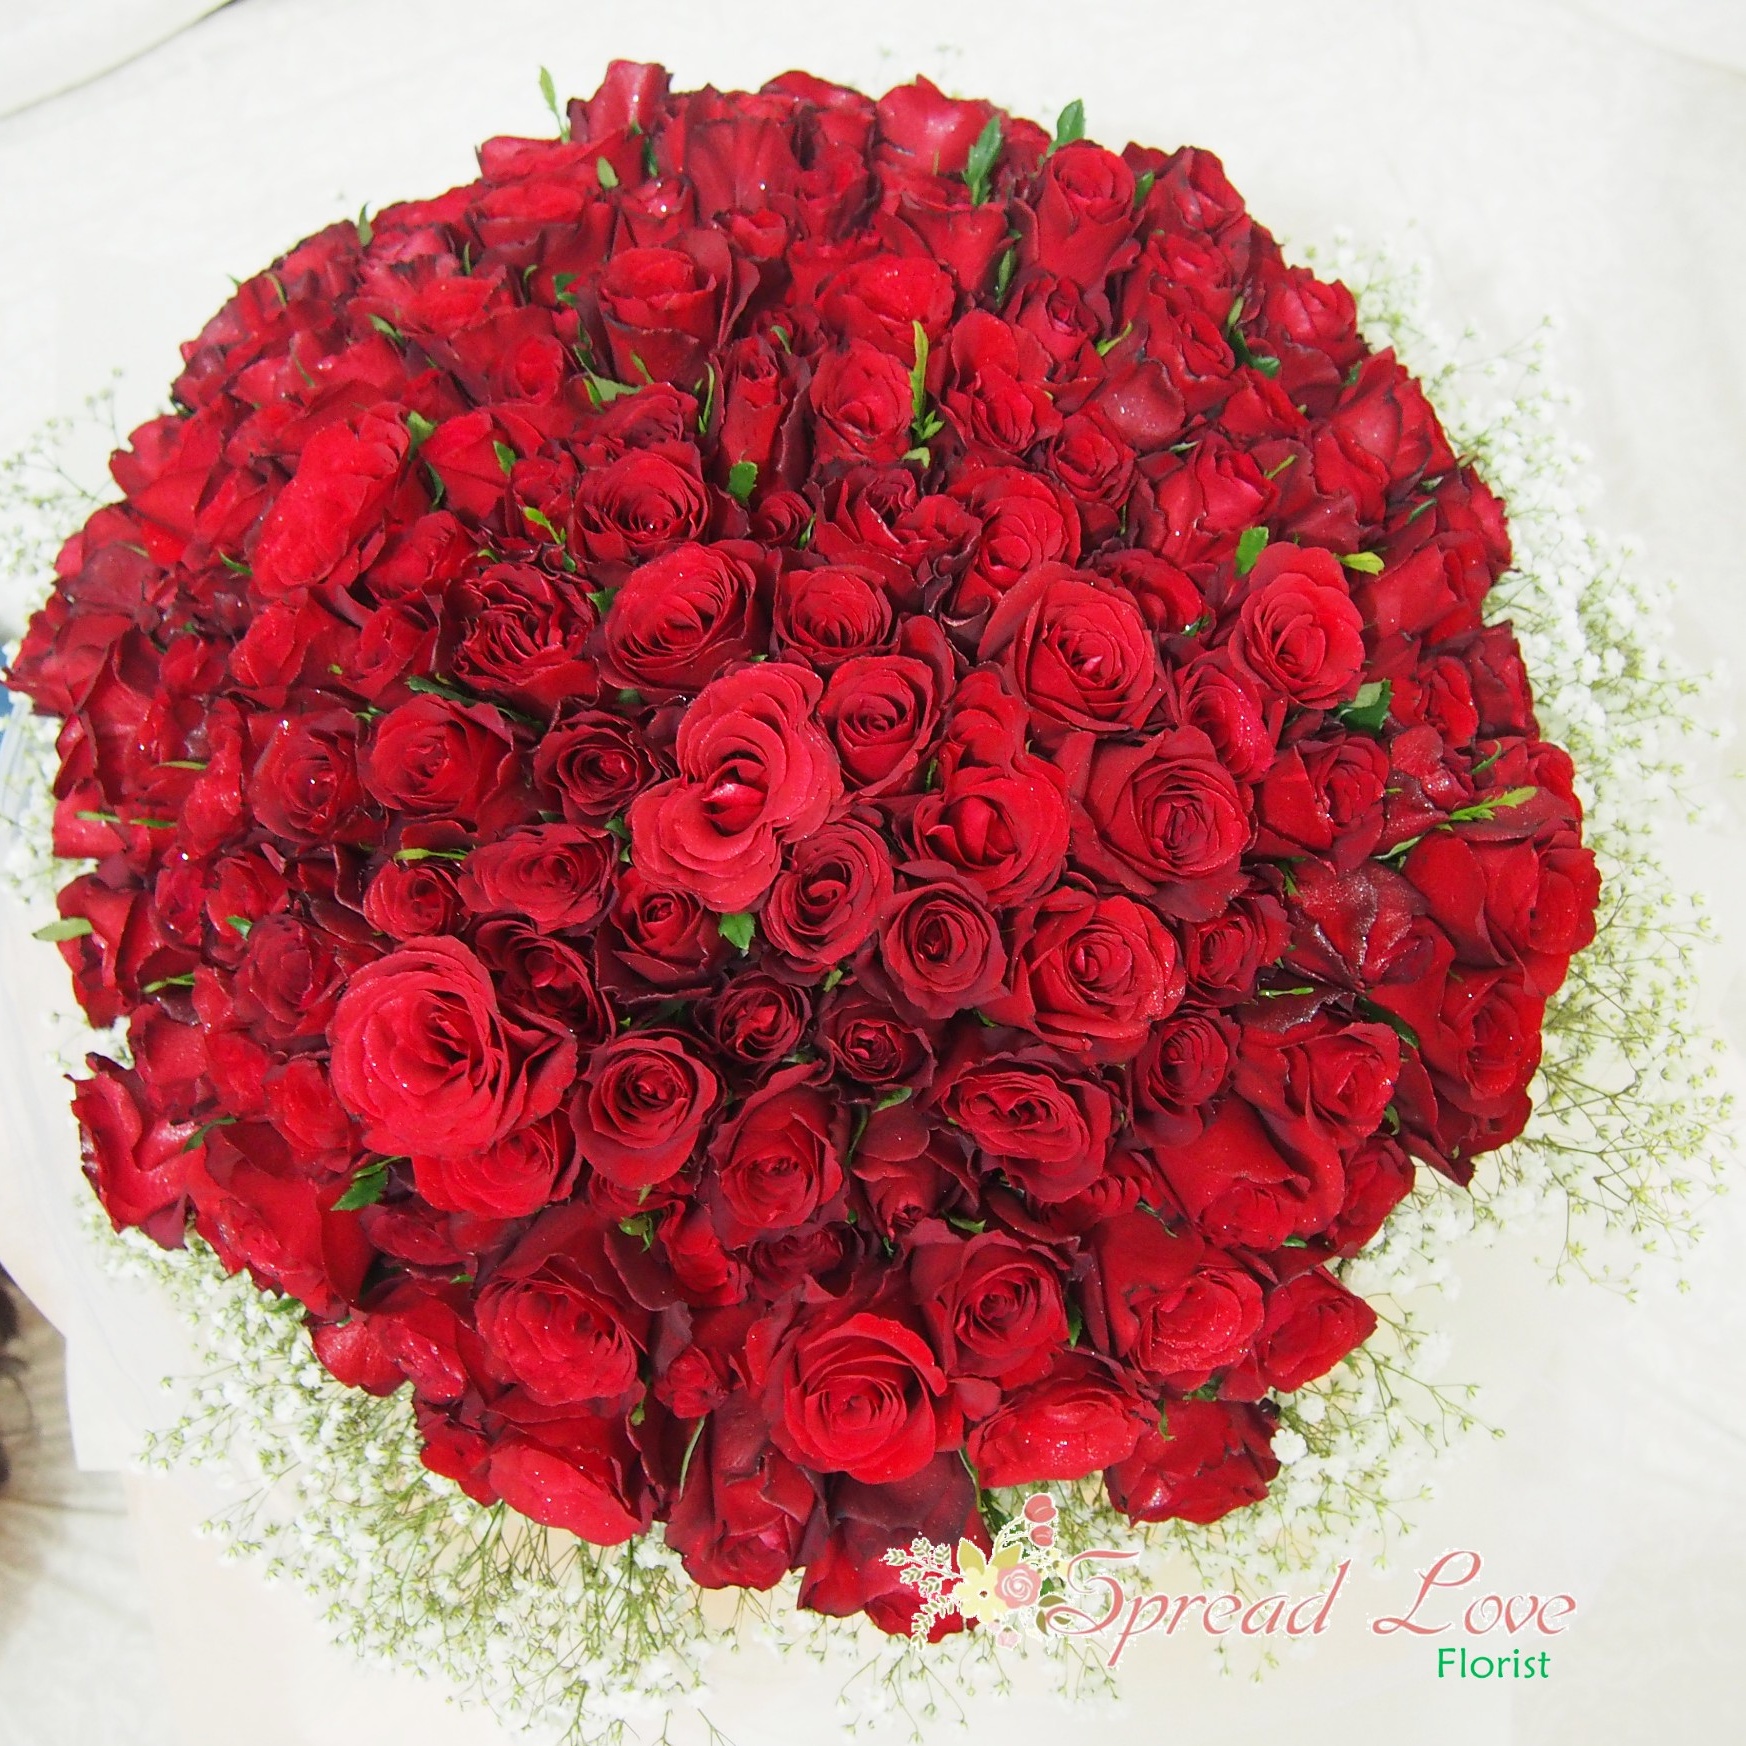 GB058- 180 Red Roses | Spread Love Florist